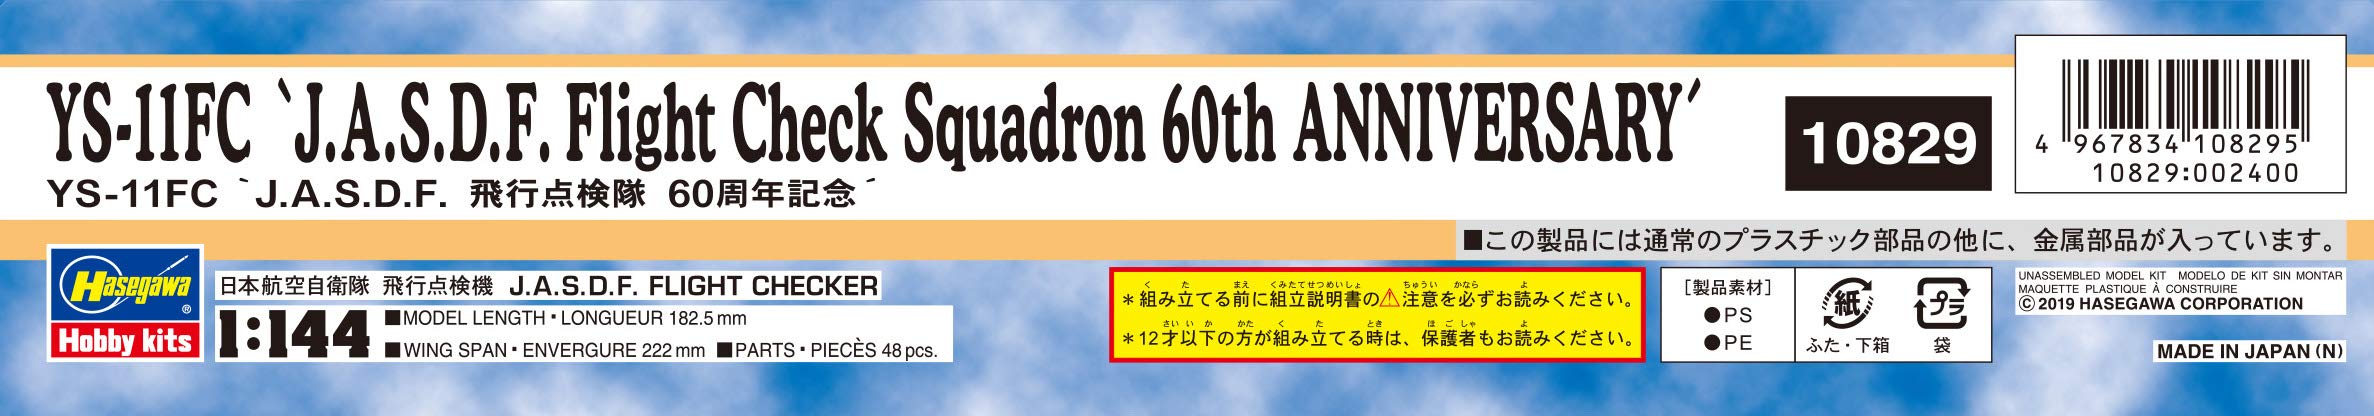 Hasegawa 60th Anniversary Jasdf Flight Inspection Team 1/144 Scale Ys-11Fc Plastic Model